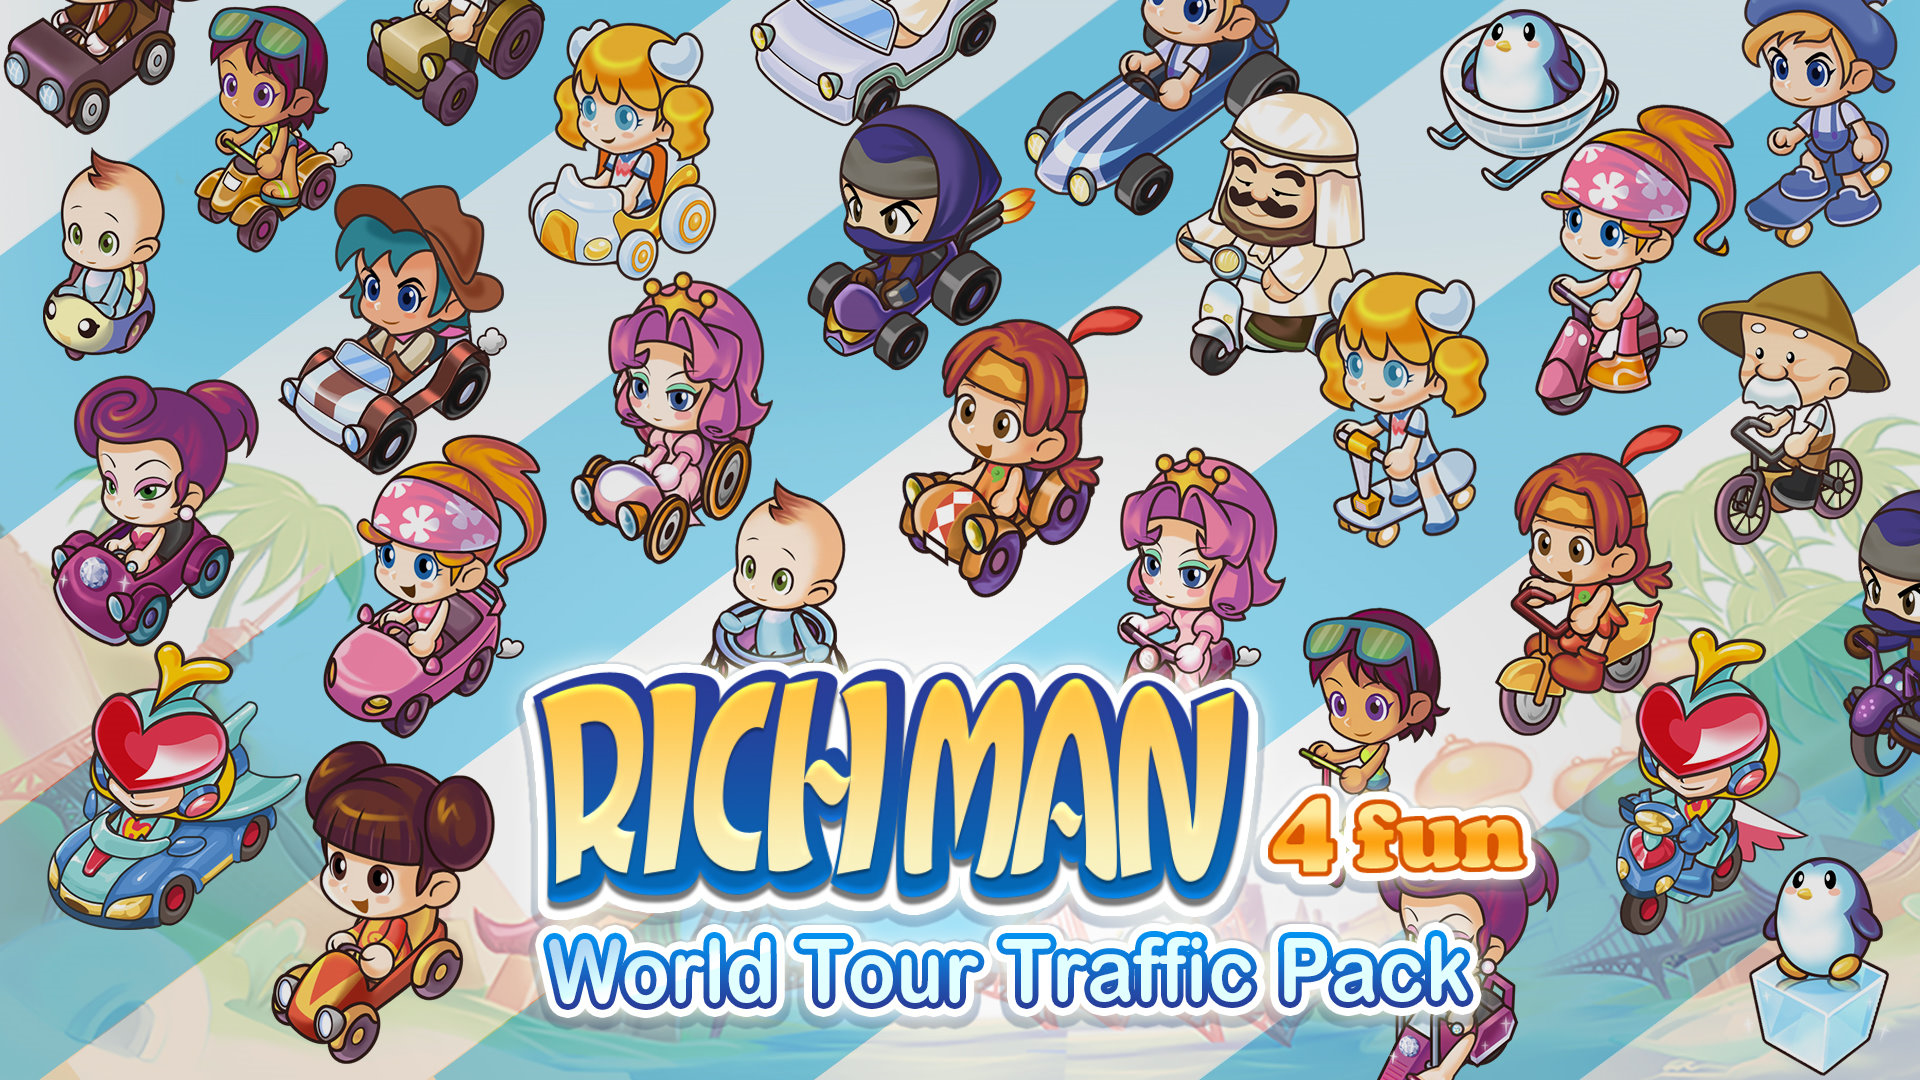 World Tour Traffic Pack